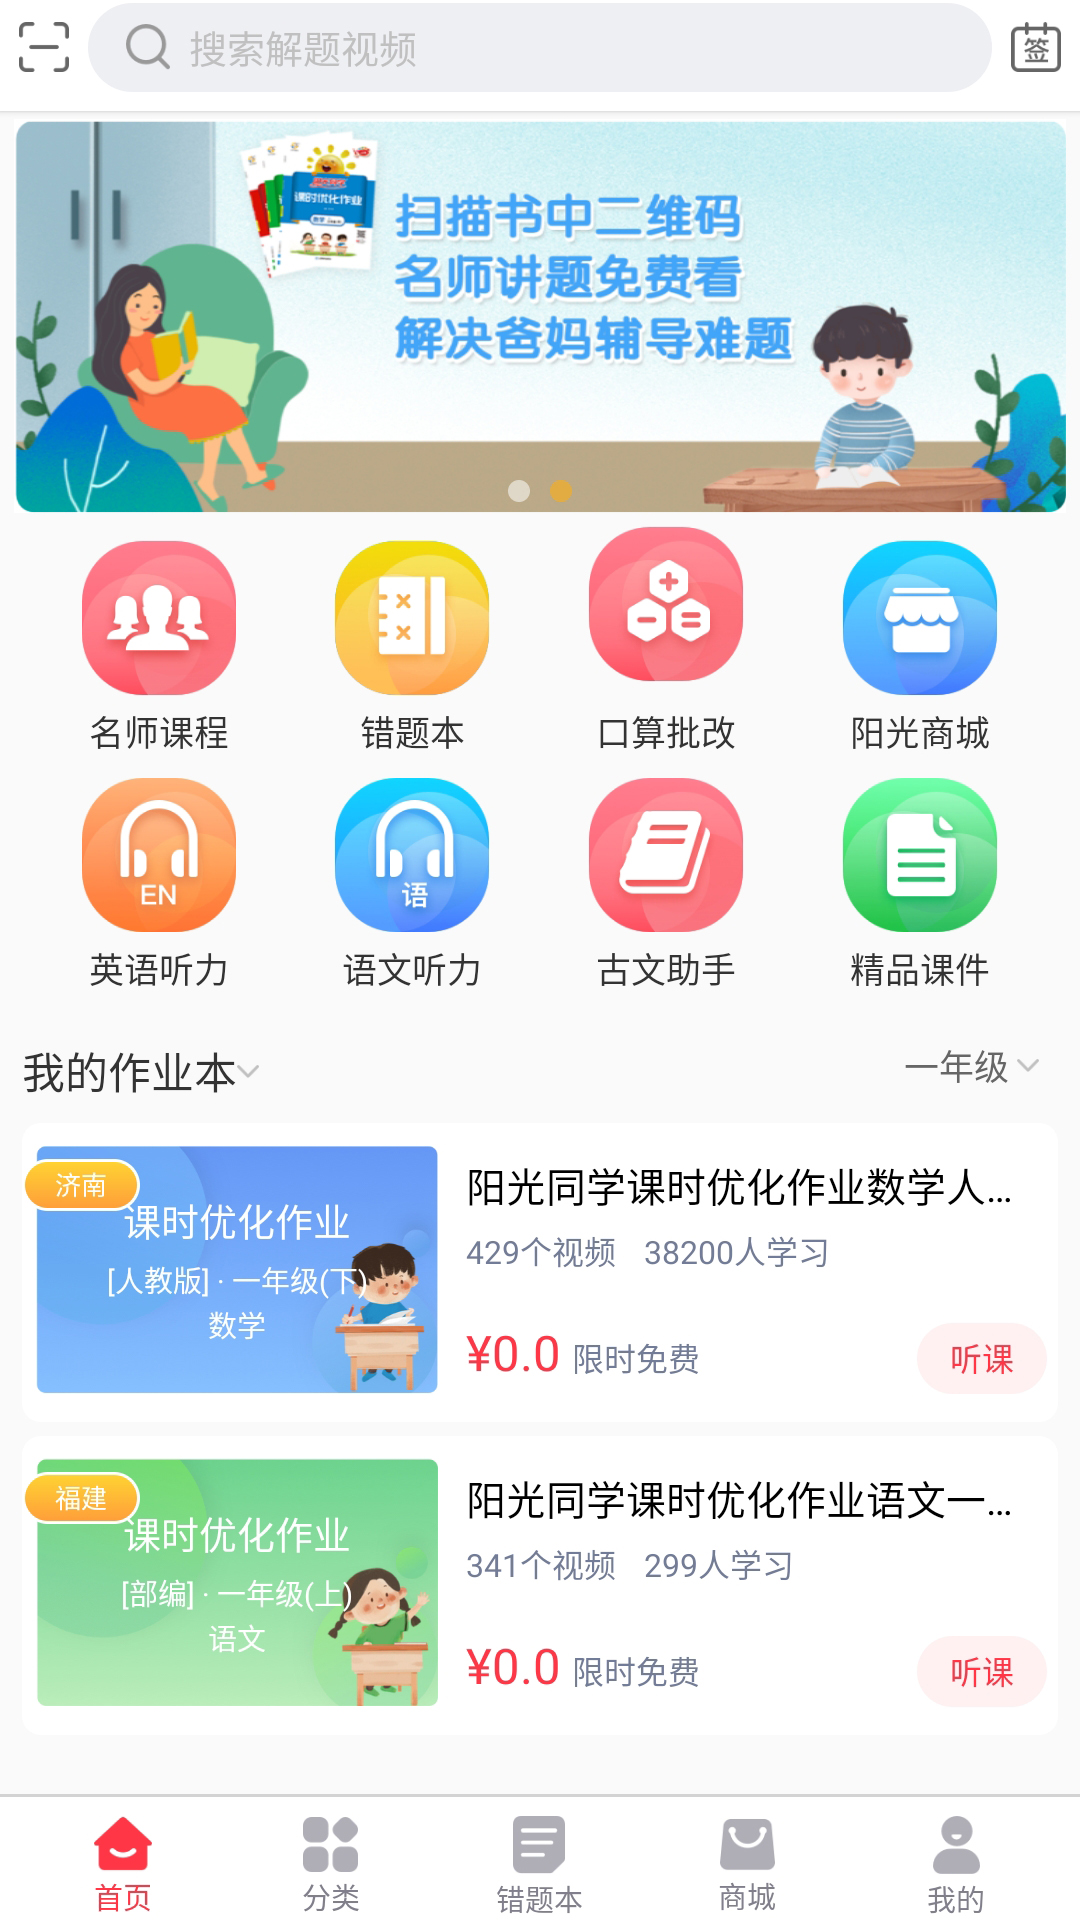 阳光同学appv1.3.3